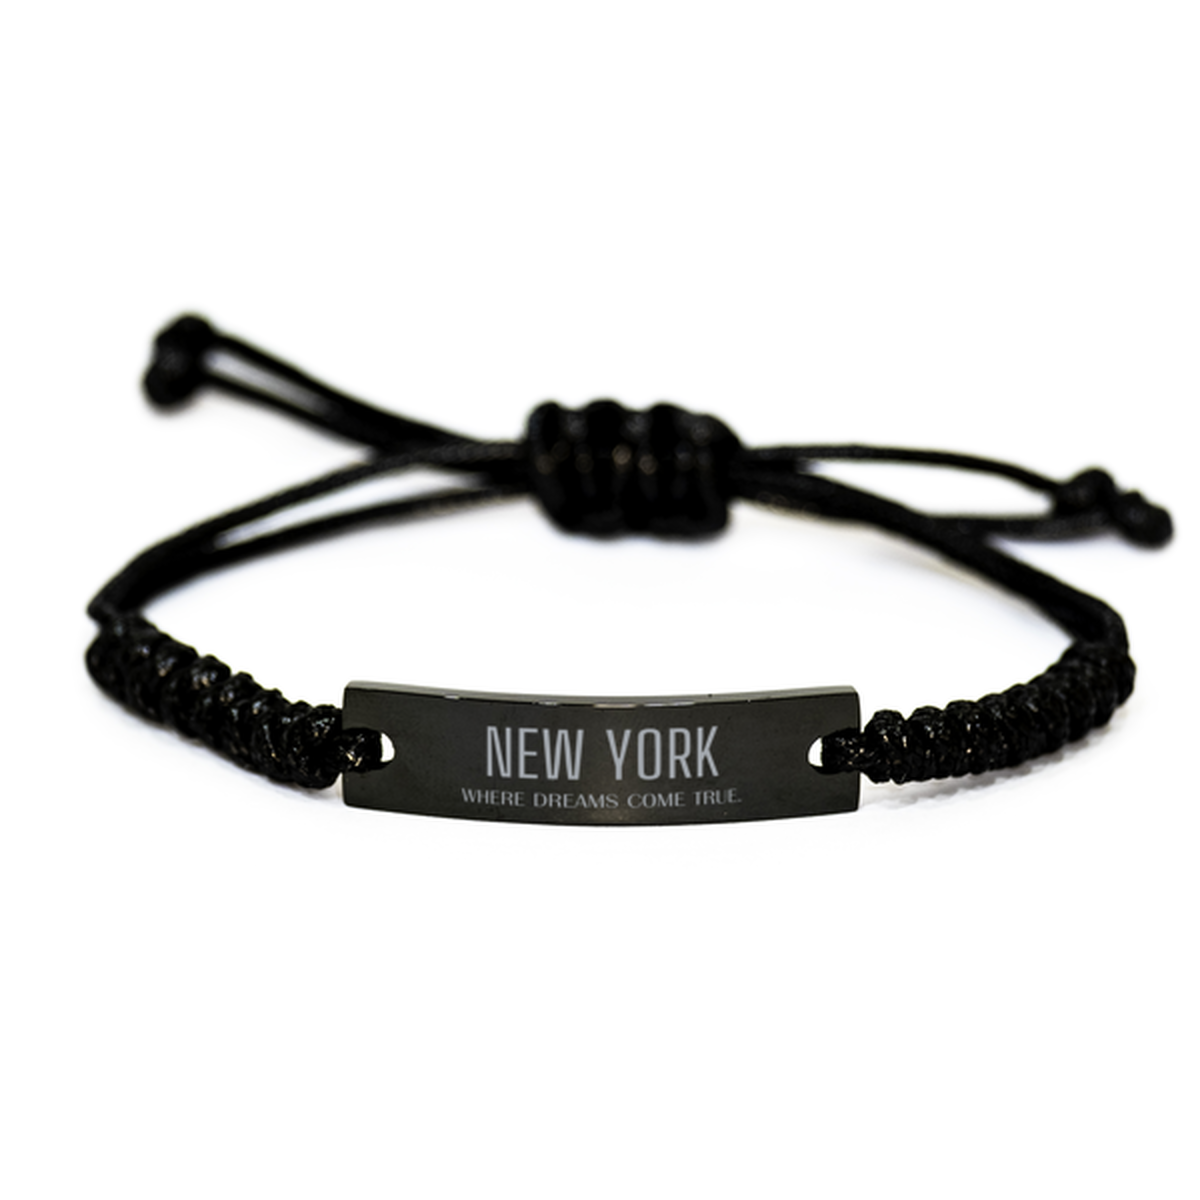 Love New York State Black Rope Bracelet, New York Where dreams come true, Birthday Inspirational Gifts For New York Men, Women, Friends